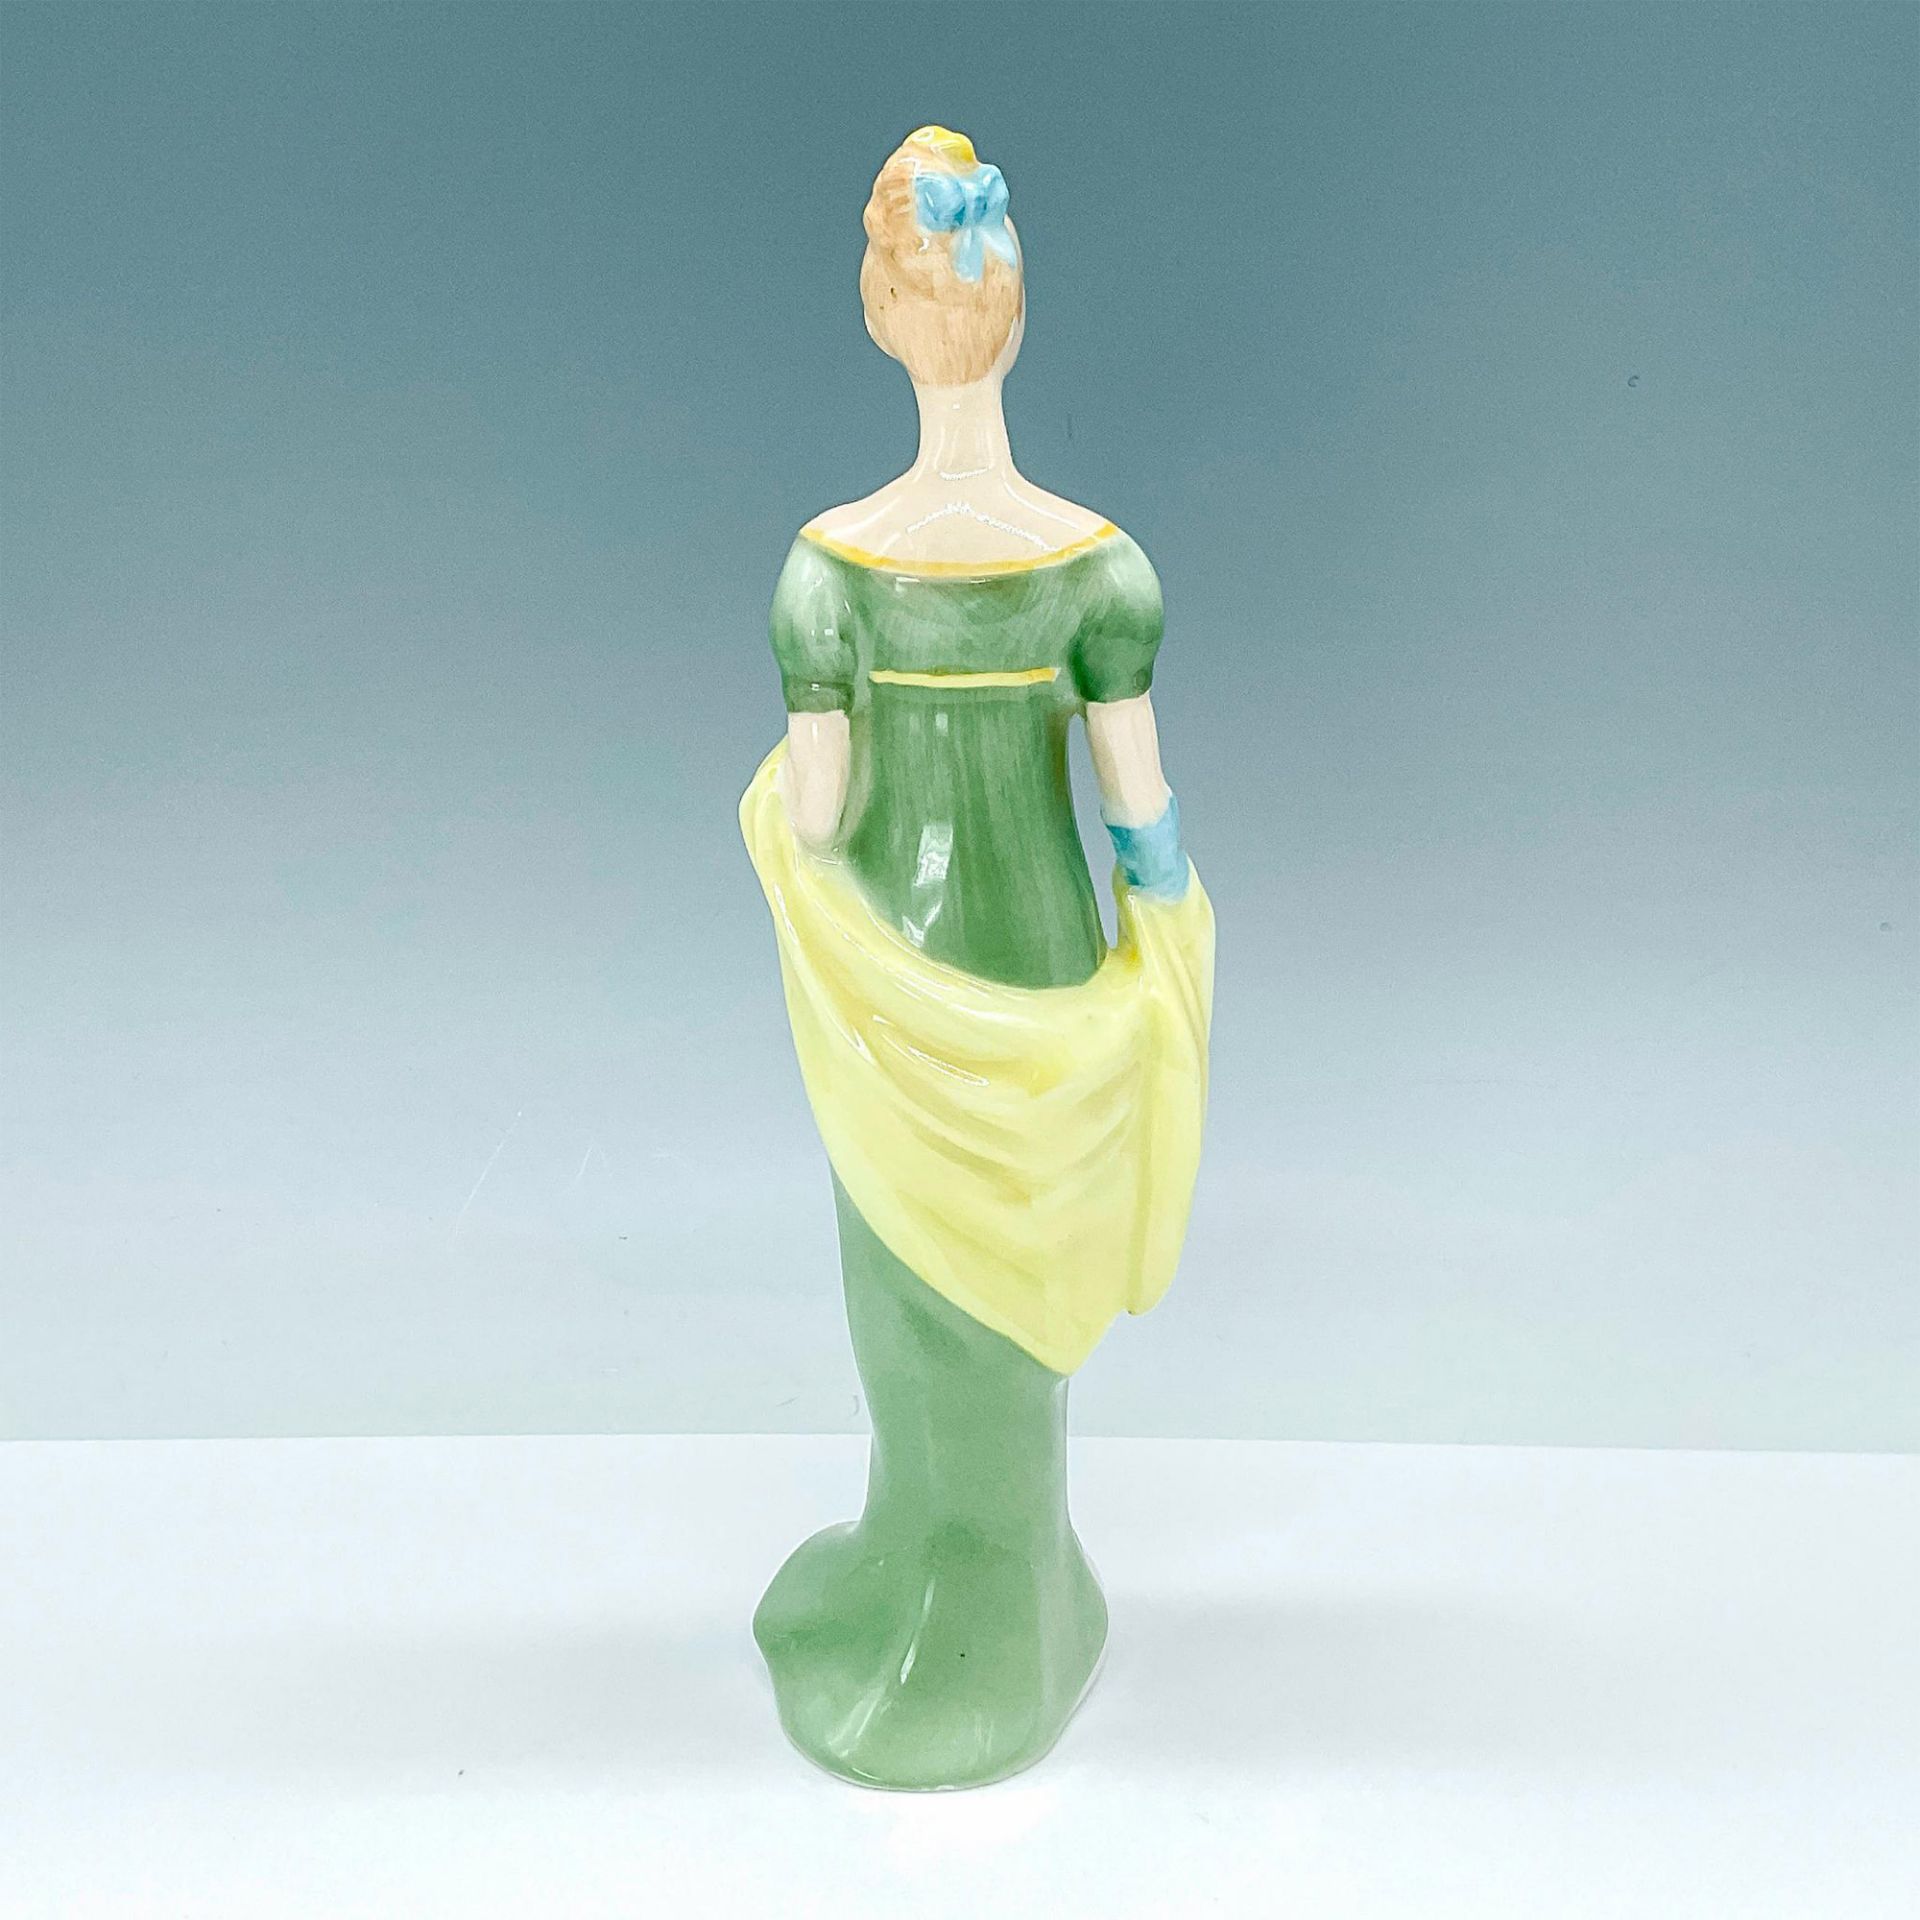 Lorna - HN2311 - Royal Doulton Figurine - Image 2 of 3